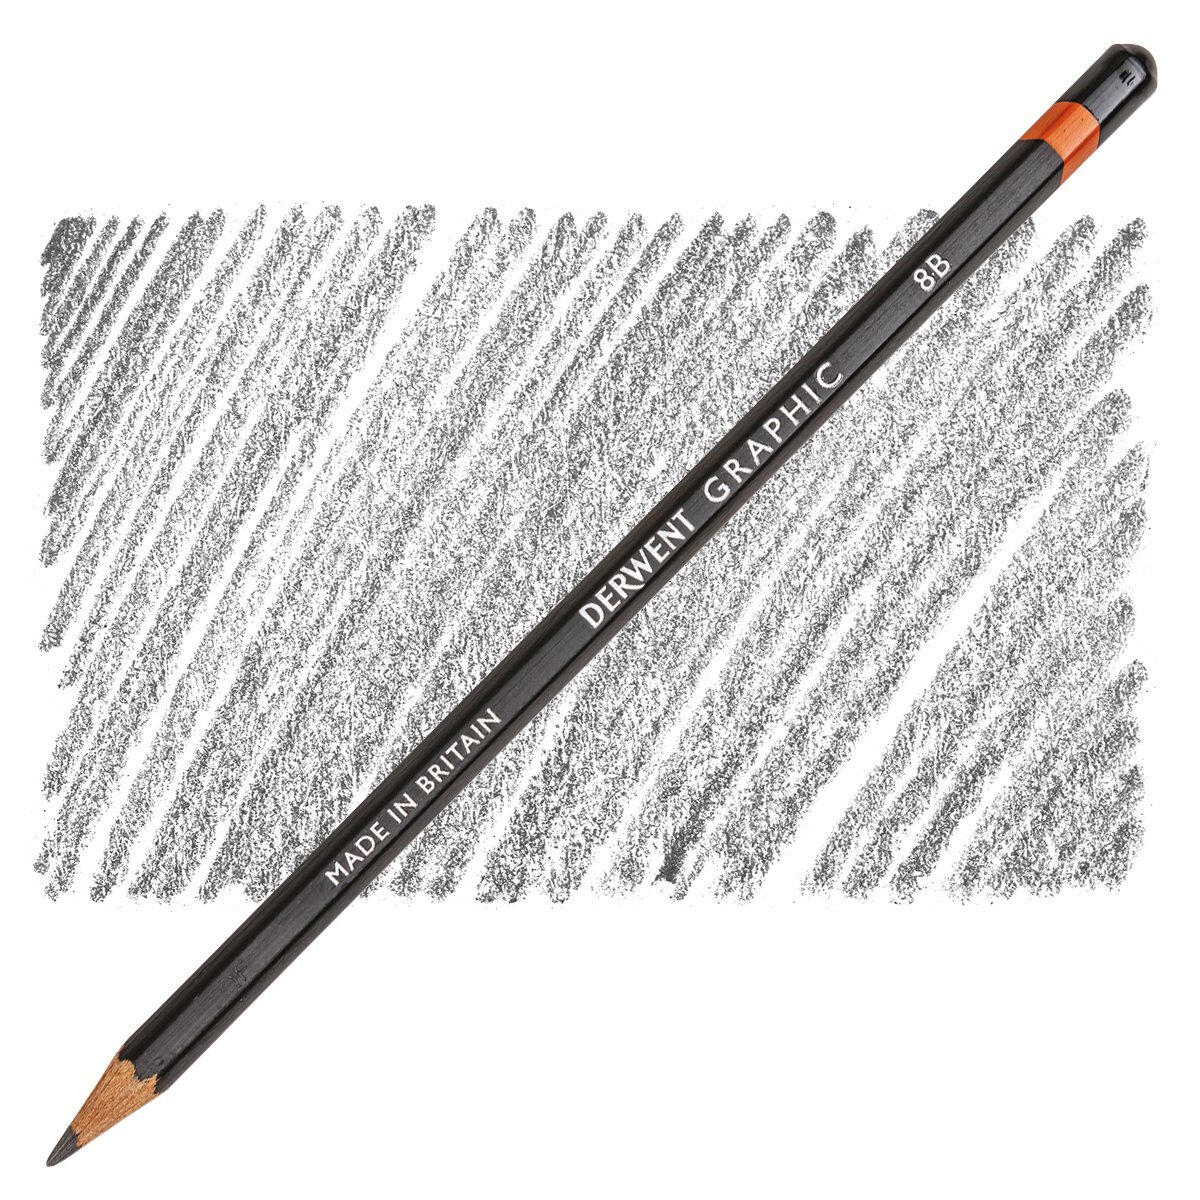 Derwent Graphic Pencils and Sets